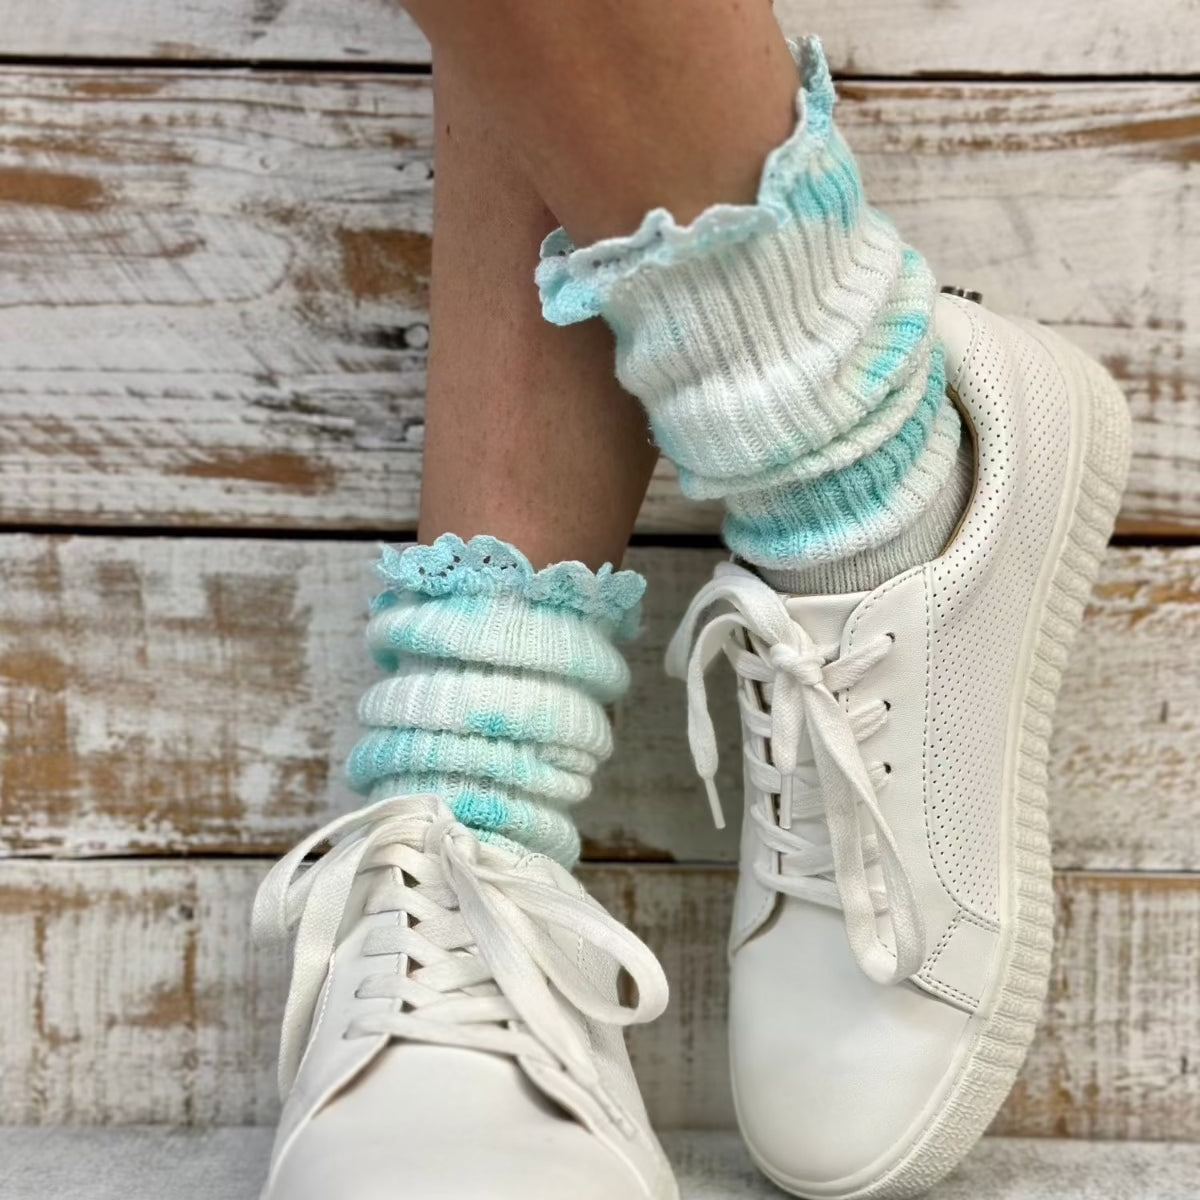 Lacy Mini cute scrunchy tie dye aqua organic slouch socks  Made in USA, eco friendly cotton socks women's